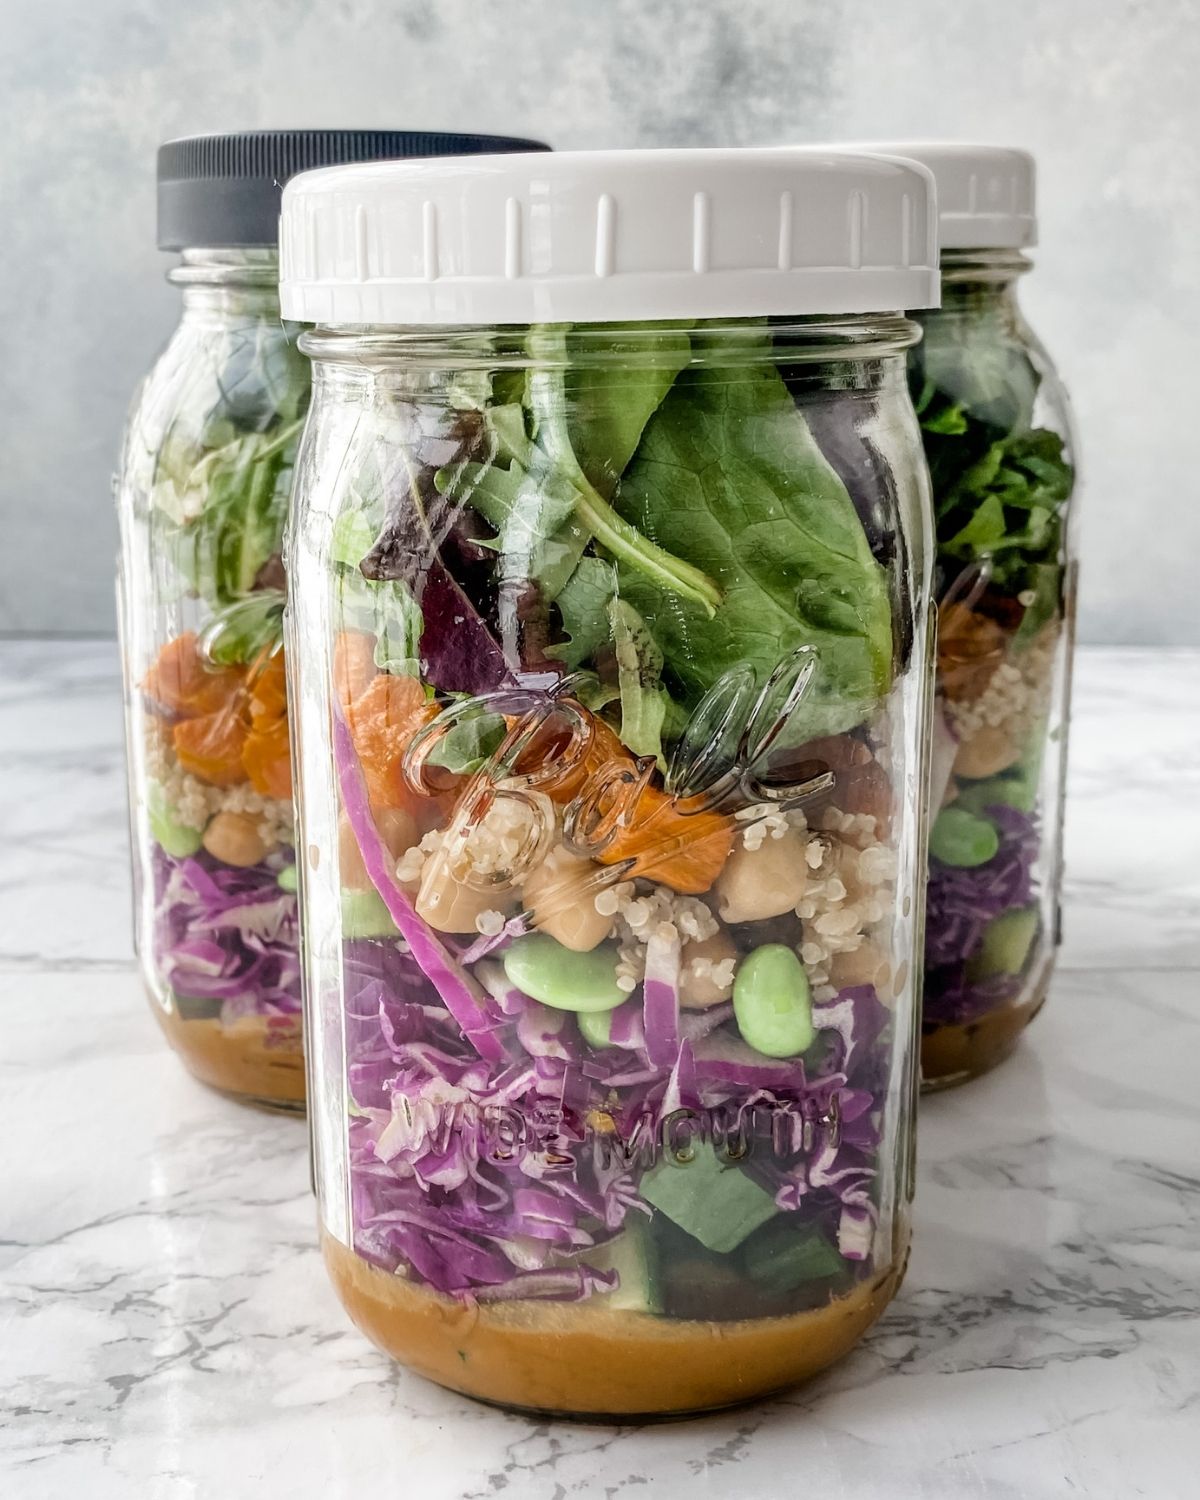 Spicy Thai salad in a covered mason jar.